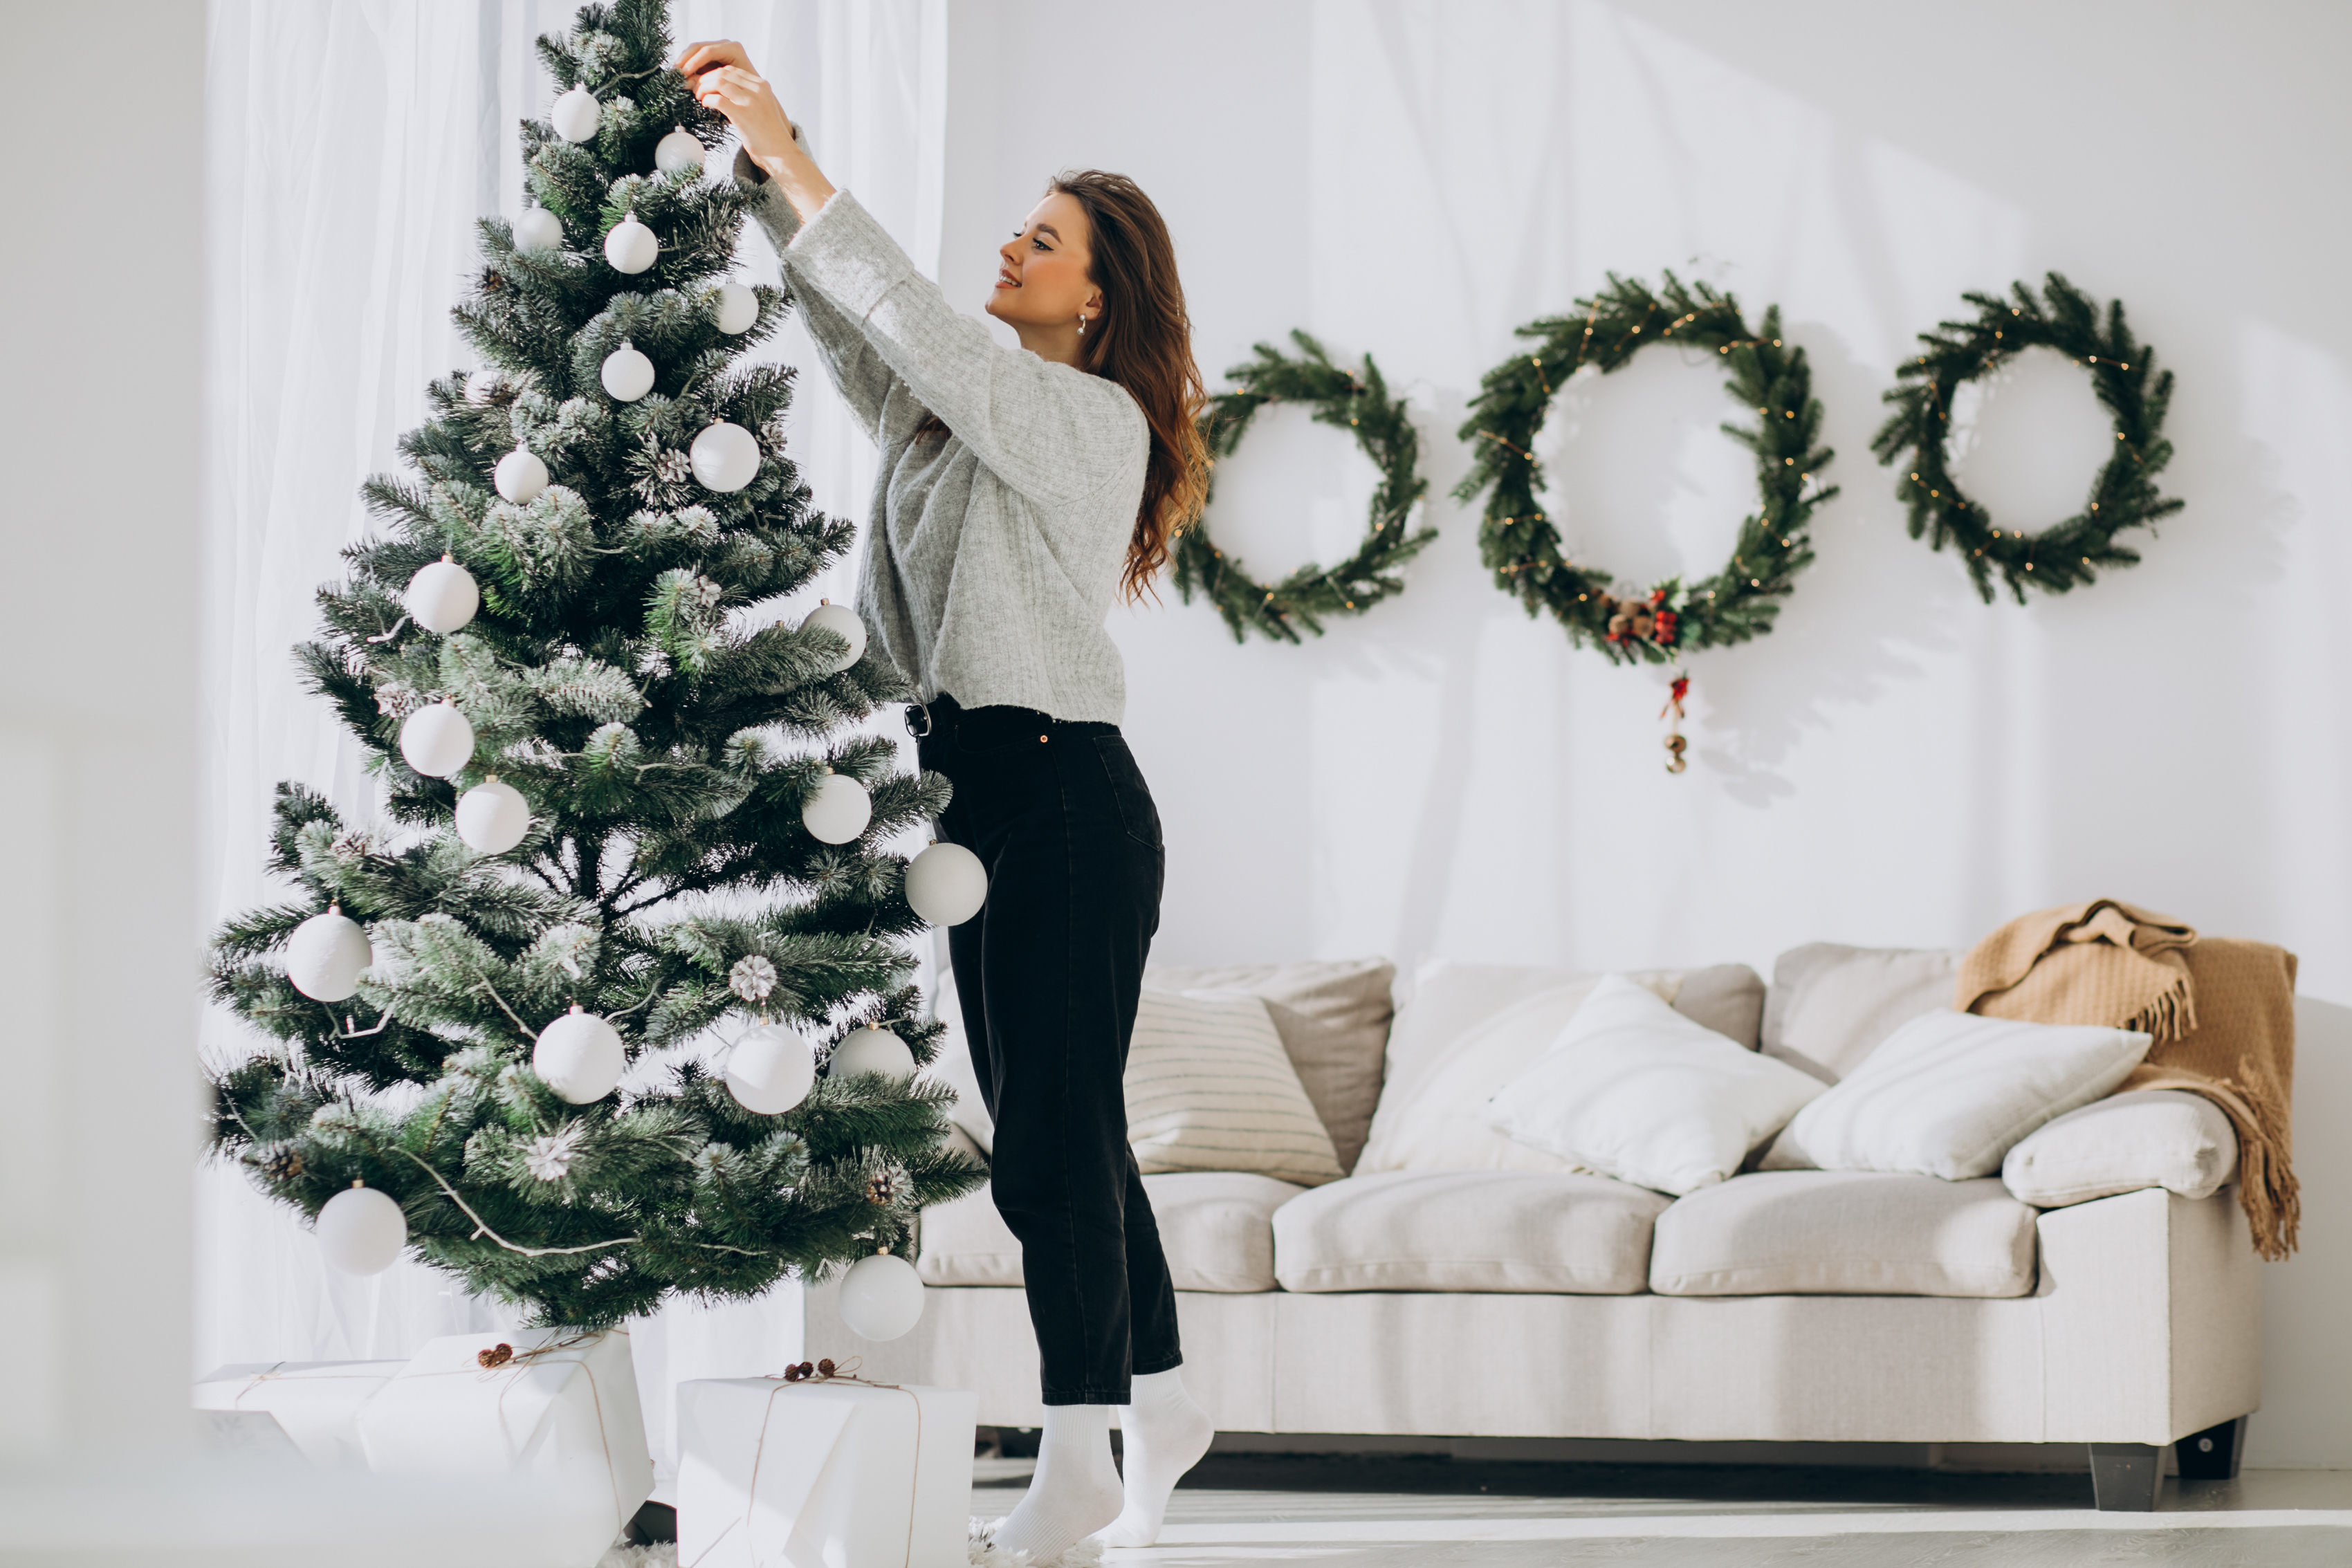 women decorating Christmas tree